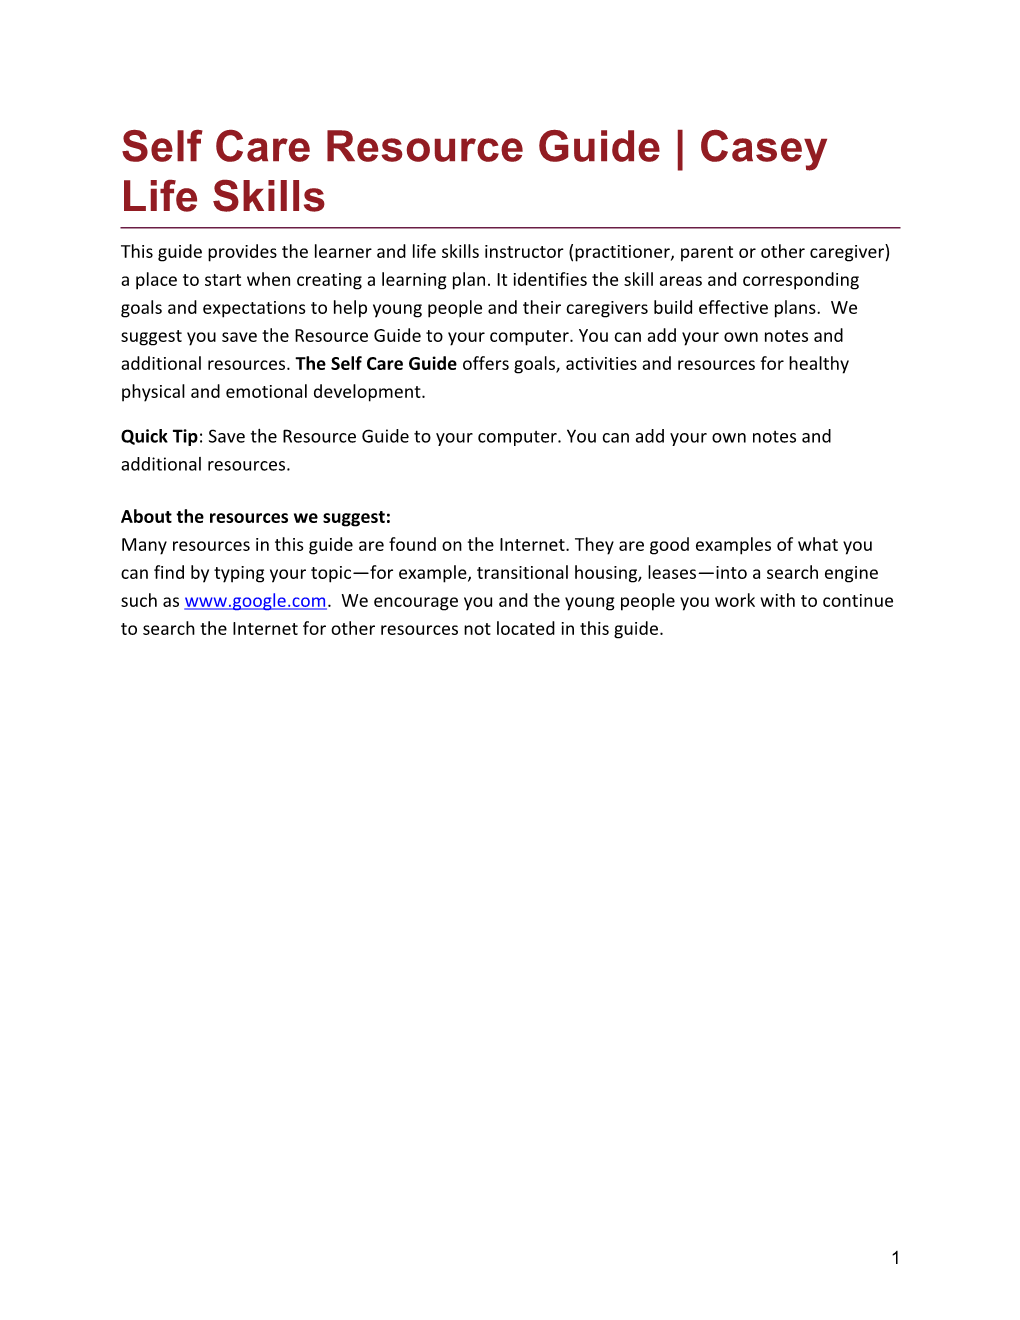 Self Care Resource Guide Casey Life Skills